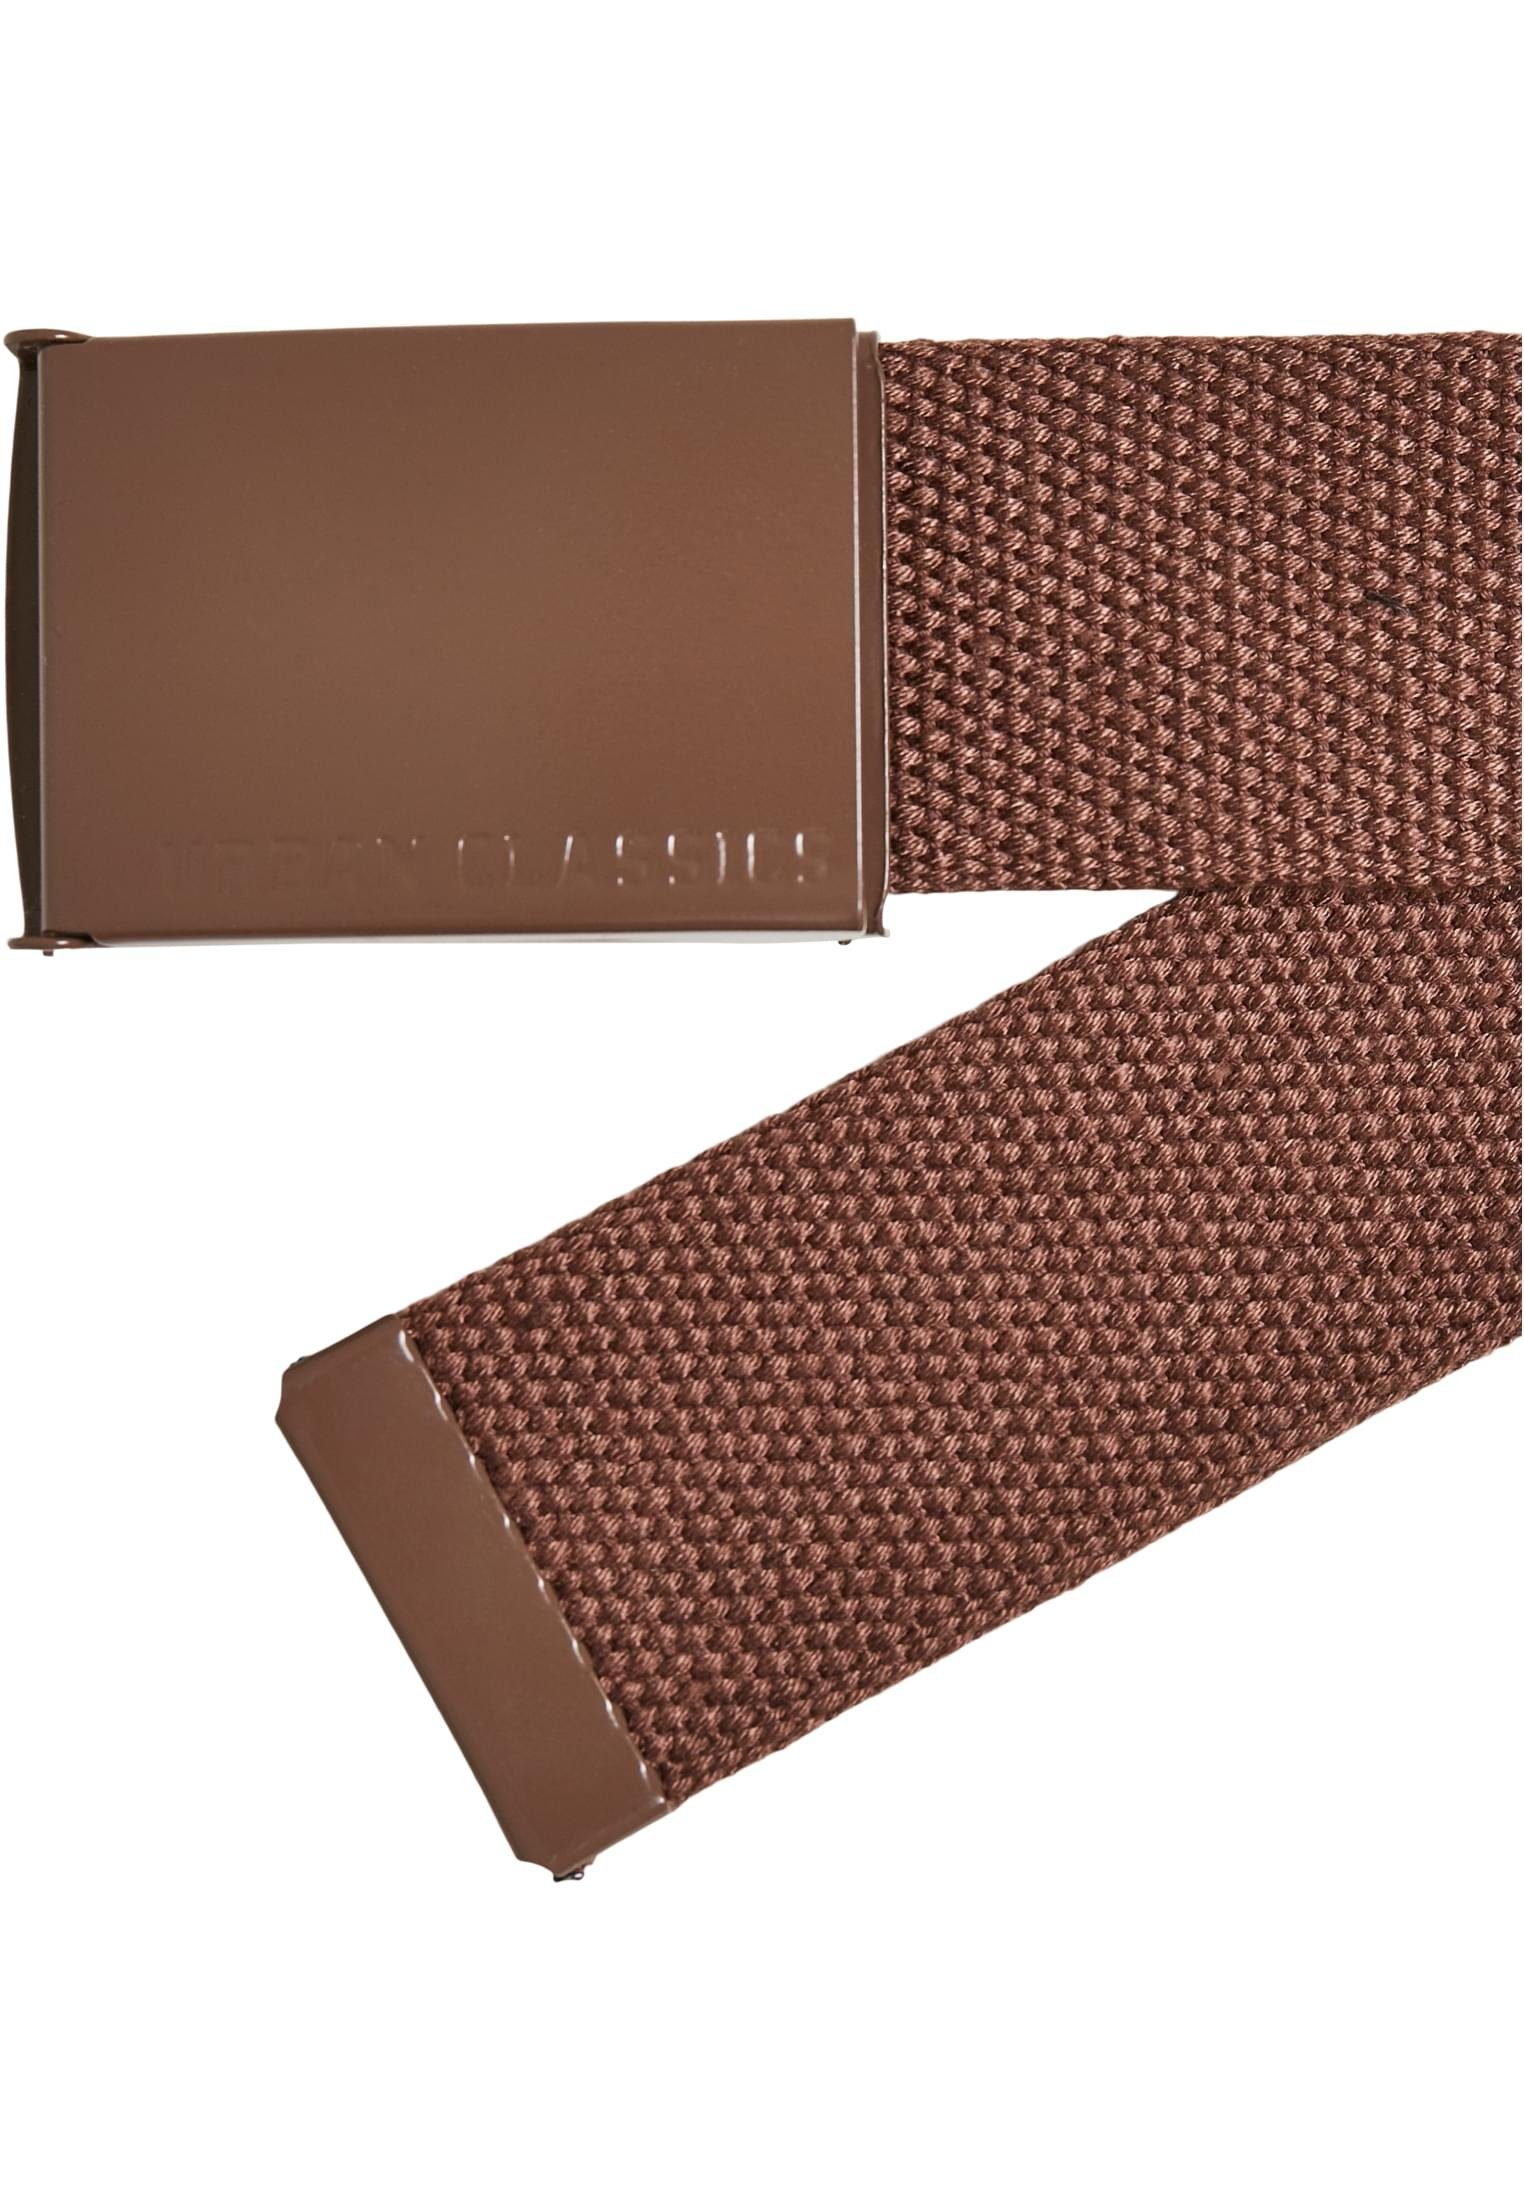 URBAN CLASSICS Hüftgürtel Accessoires 2-Pack Colored bark-whitesand Buckle Canvas Belt